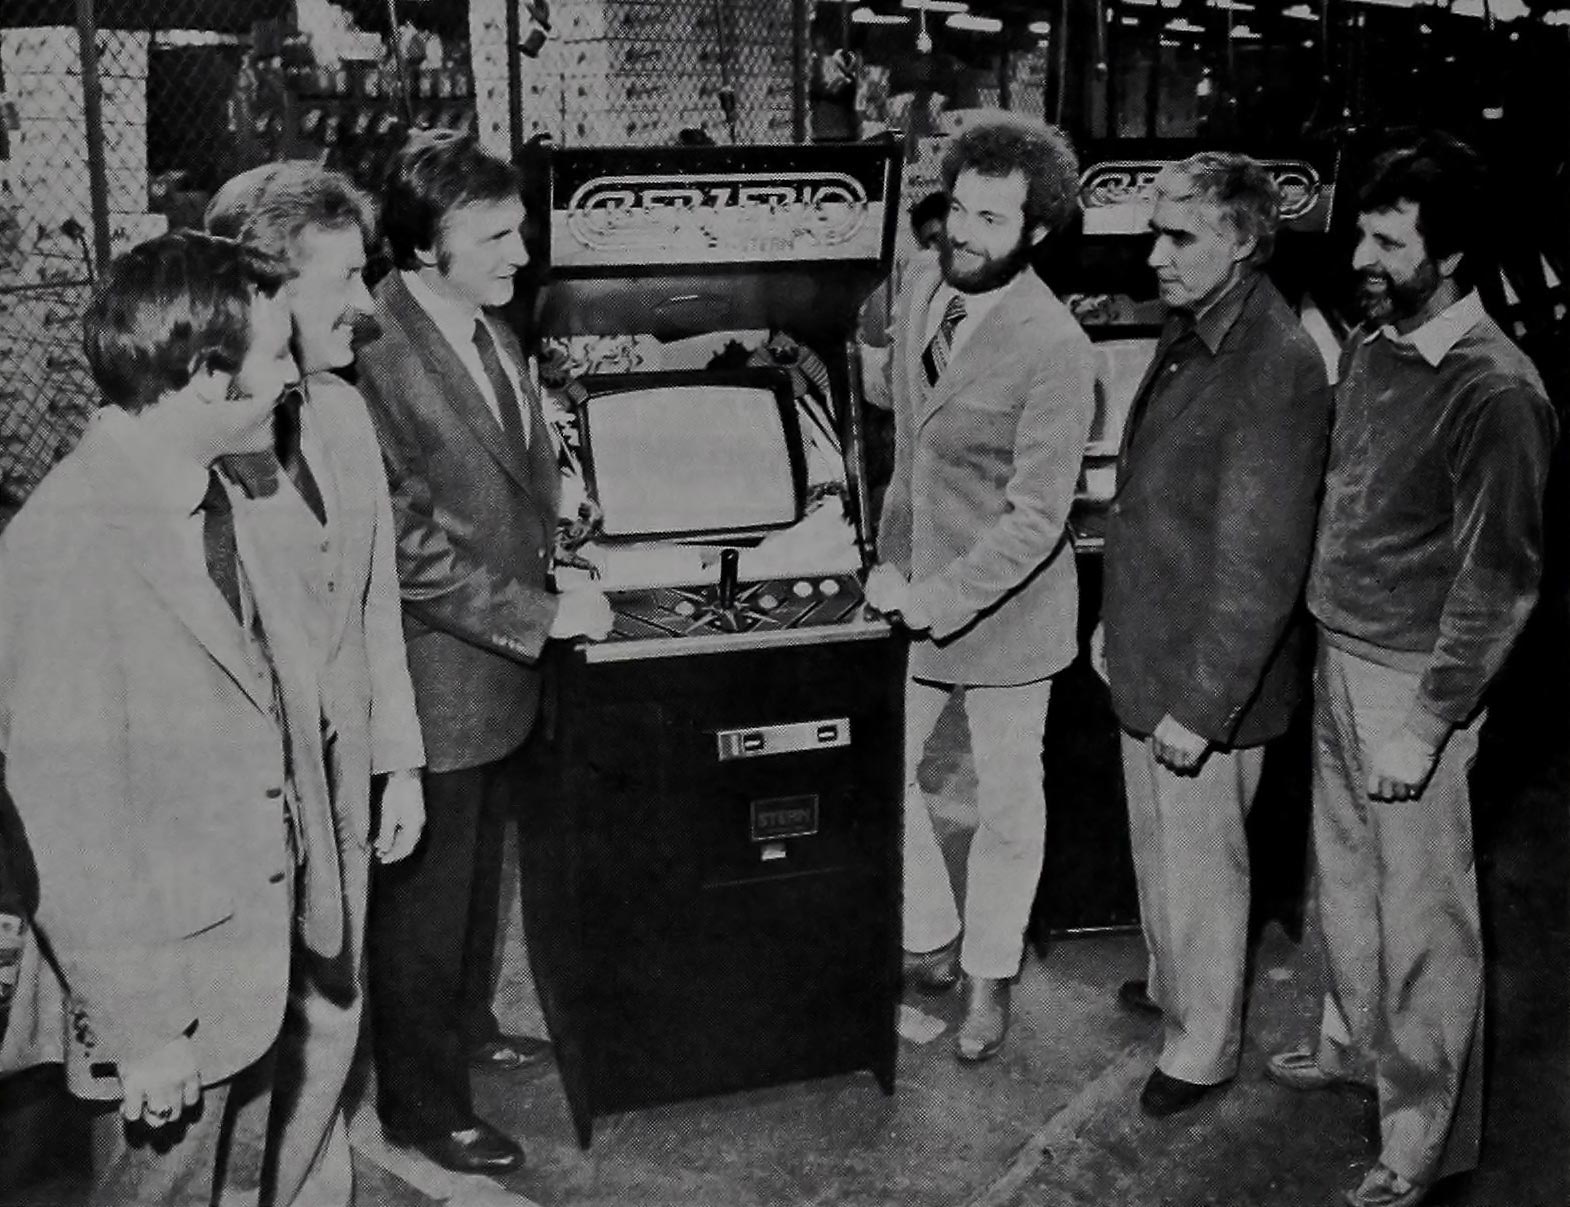 Berzerk, an arcade video game by Stern